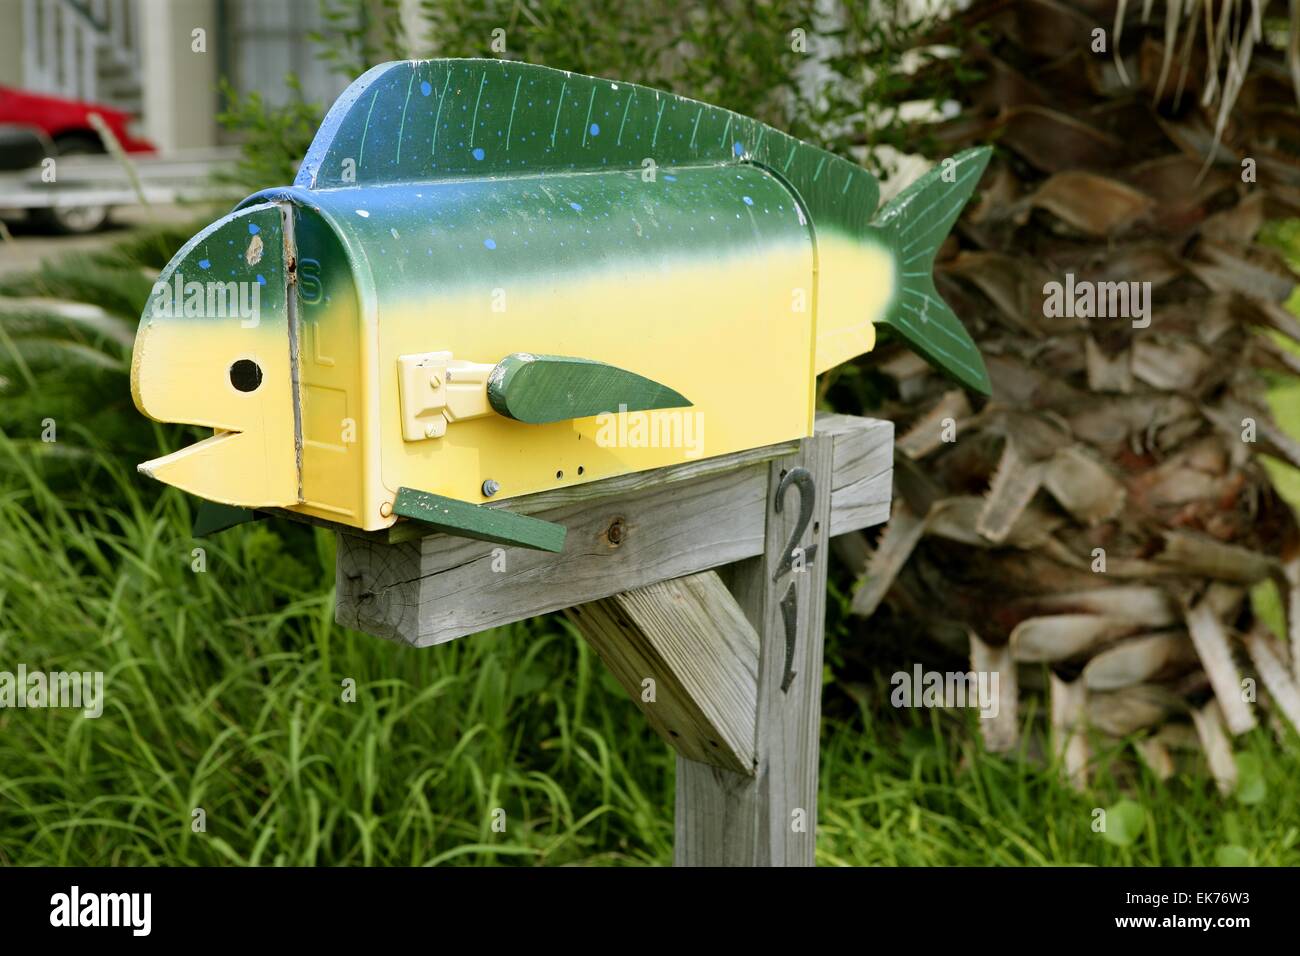 Fun artistic mail box with fish shape Stock Photo